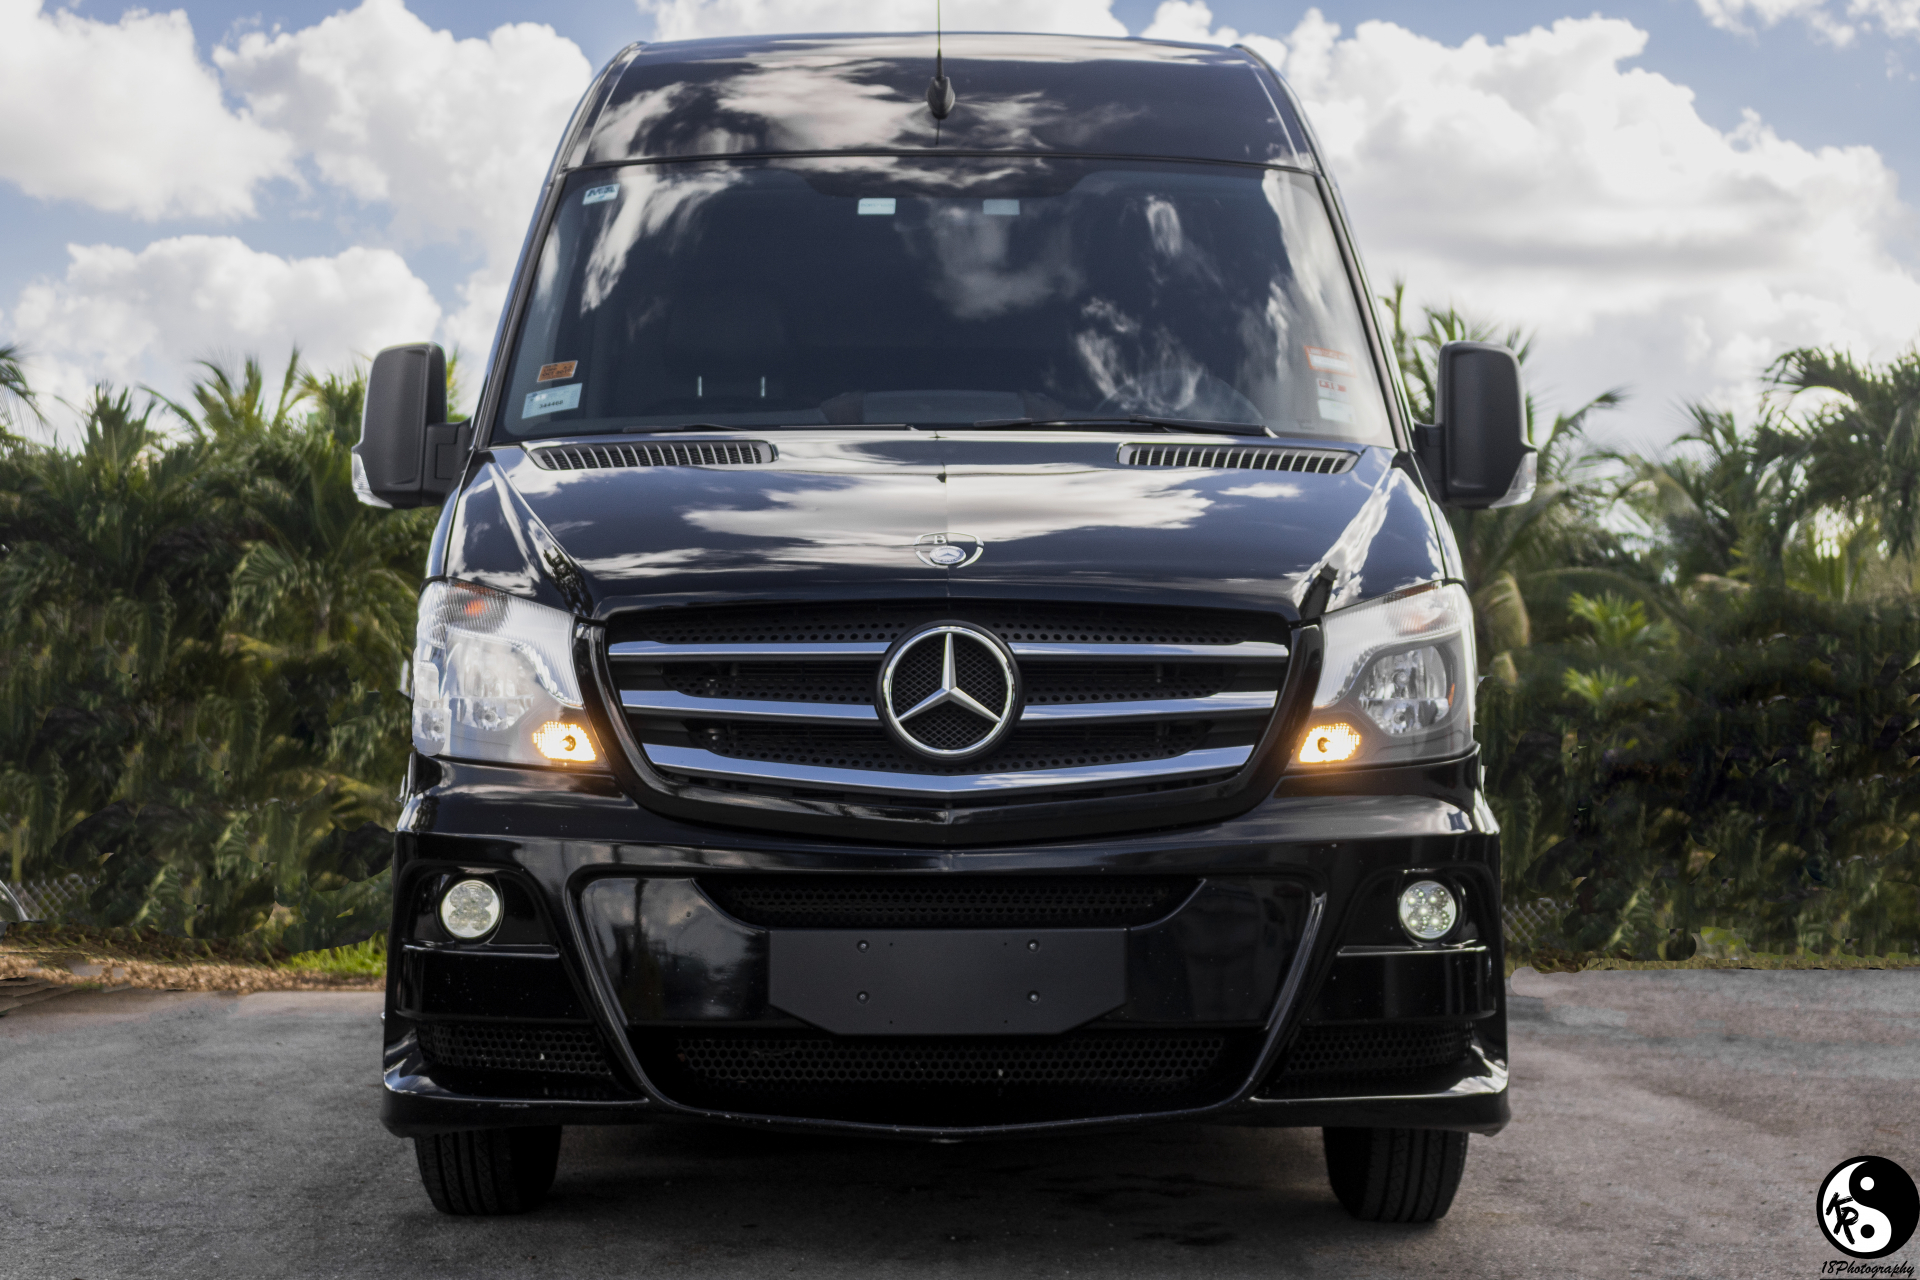 NEW 2016 Mercedes Benz Sprinter Limo Coach
Van /
Boca Raton, FL

 / Hourly $0.00
